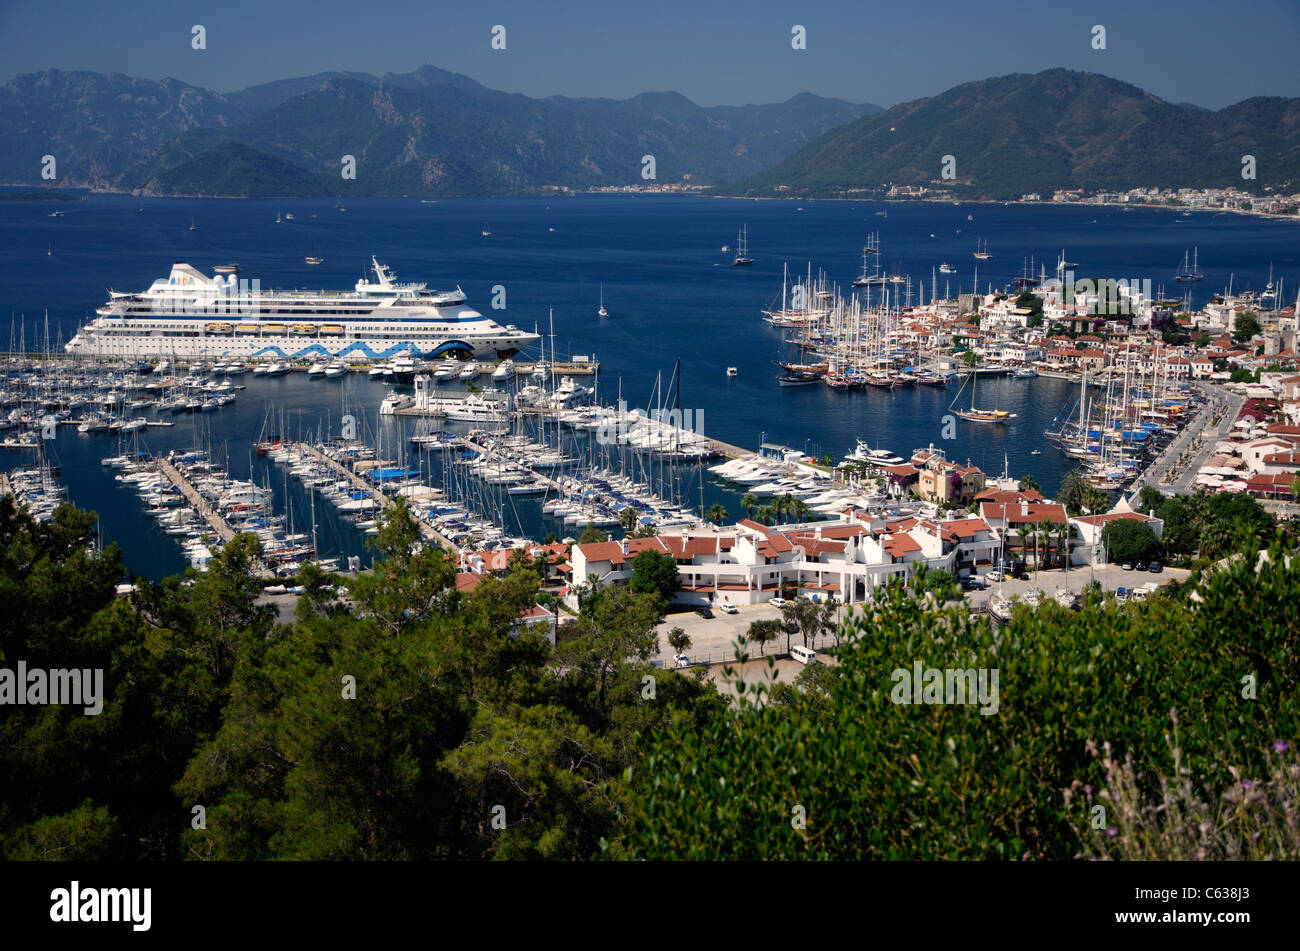 Port of Marmaris, Turkey. Old town with marina and cruise ship AIDA Aura on quay. Stock Photo